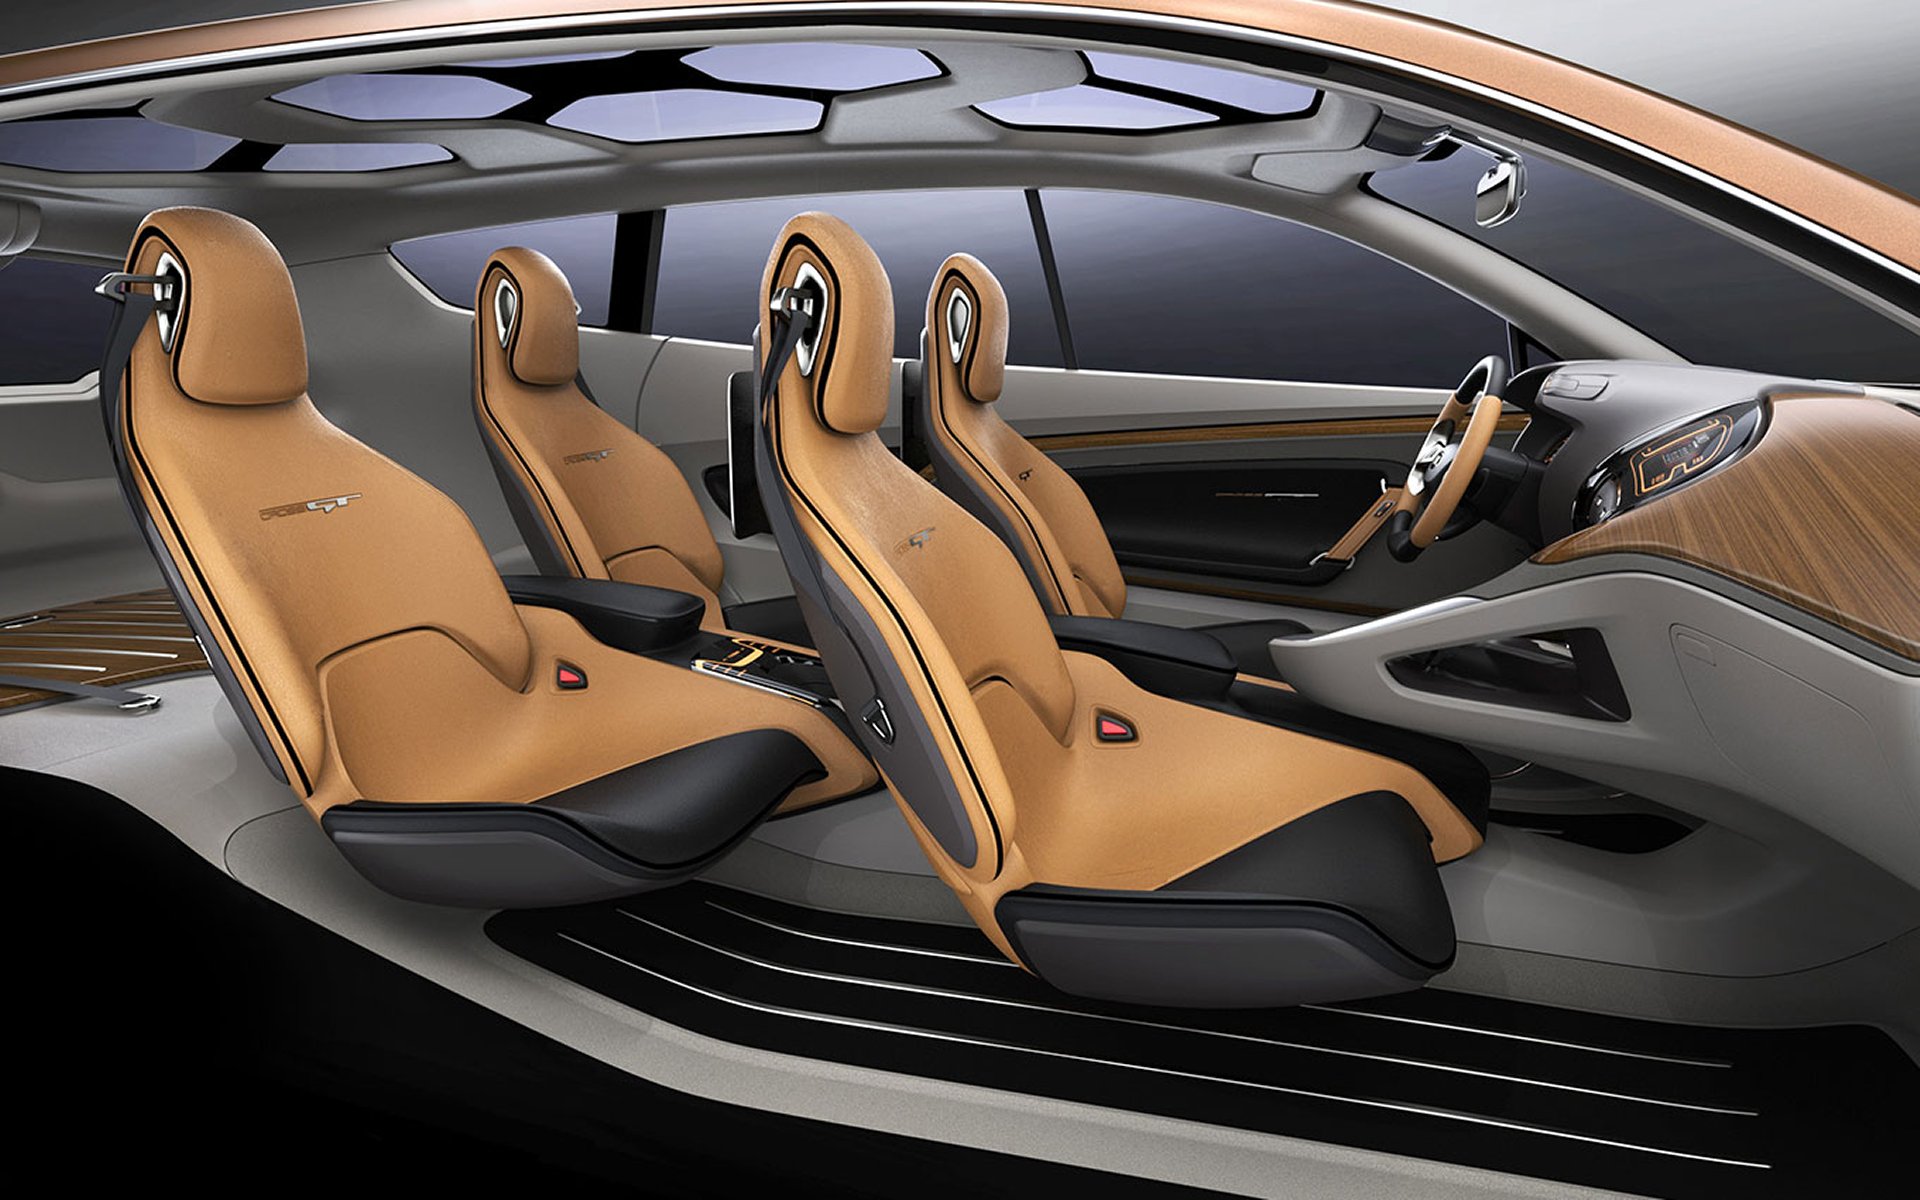 Kia Cross GT interior whole seat view